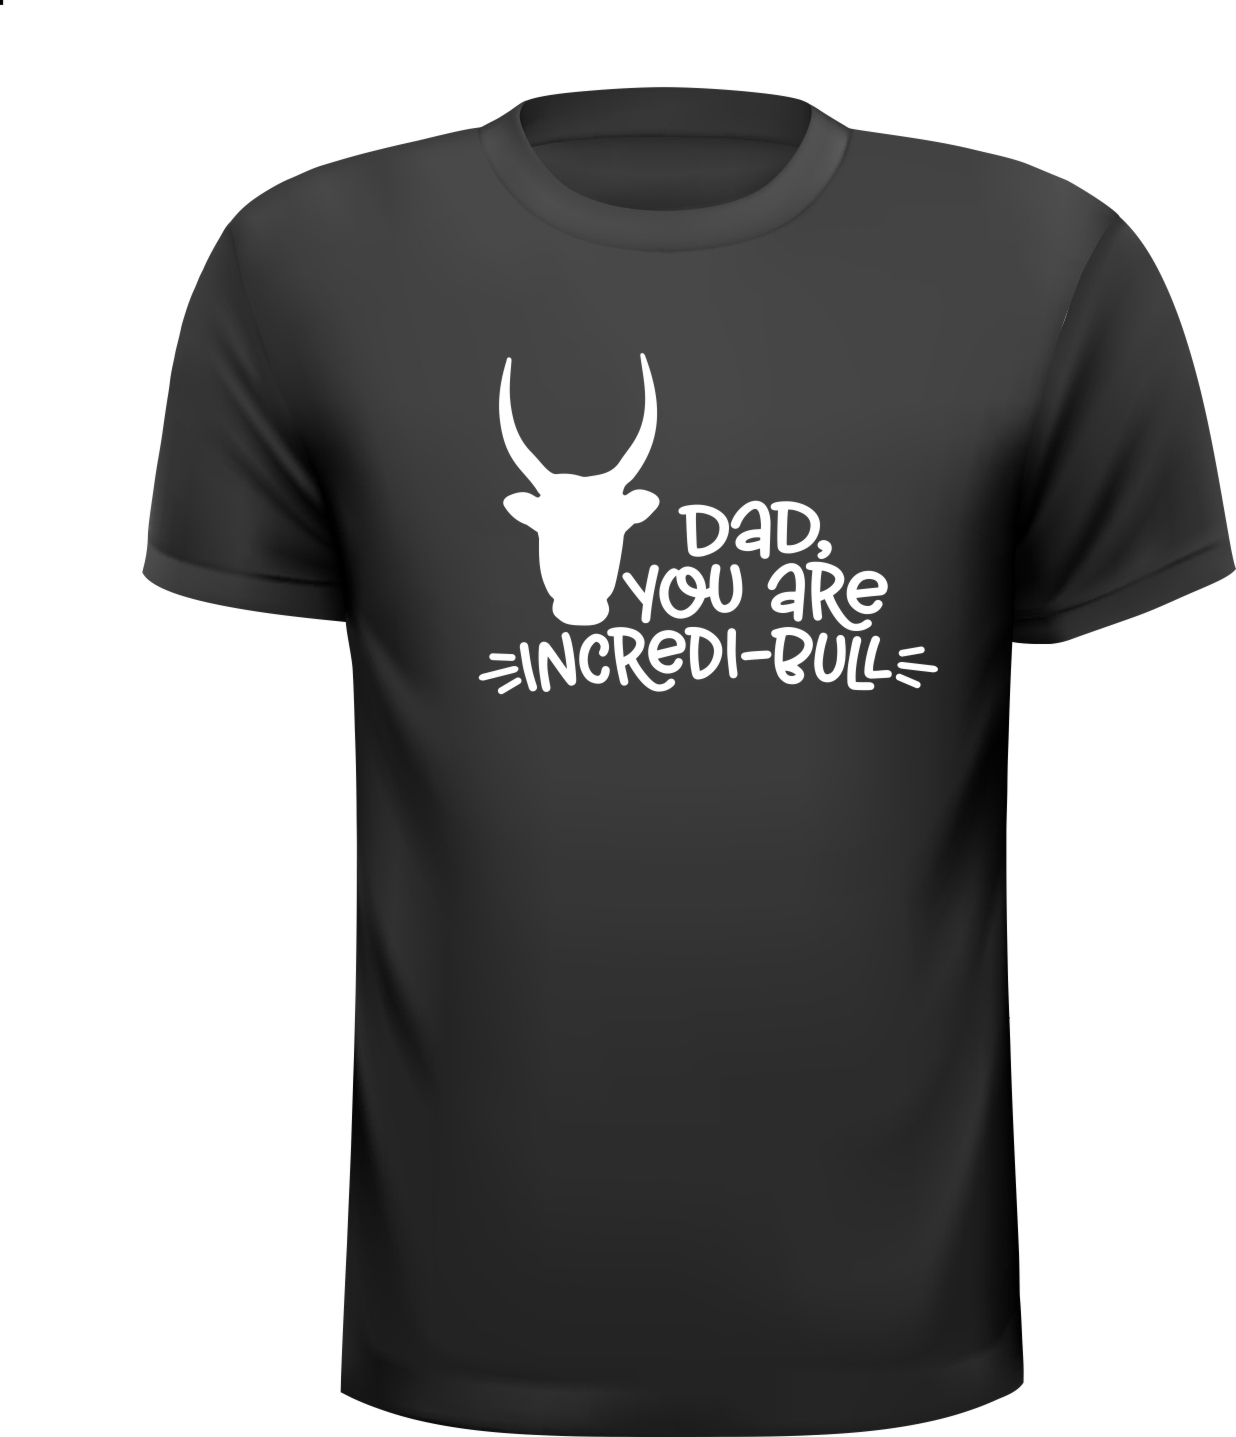 T-shirt Dad you are incredi-bull geweldige vader stier grappig humor Vaderdag stoer